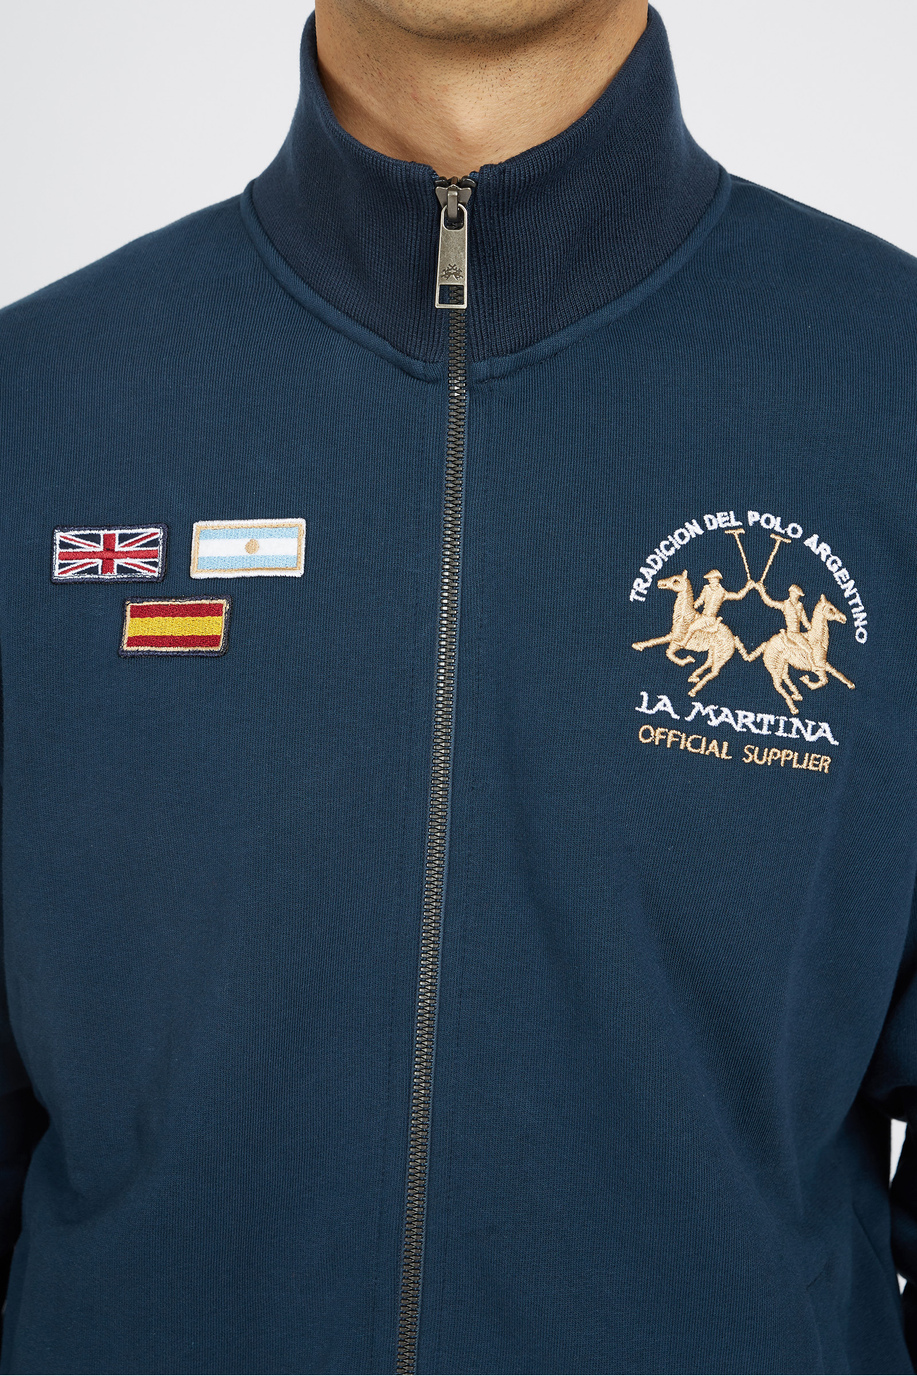 Langärmliges Herren-Sweatshirt aus 100 % Baumwolle comfort fit  -  Vasileios - Sweatshirts | La Martina - Official Online Shop